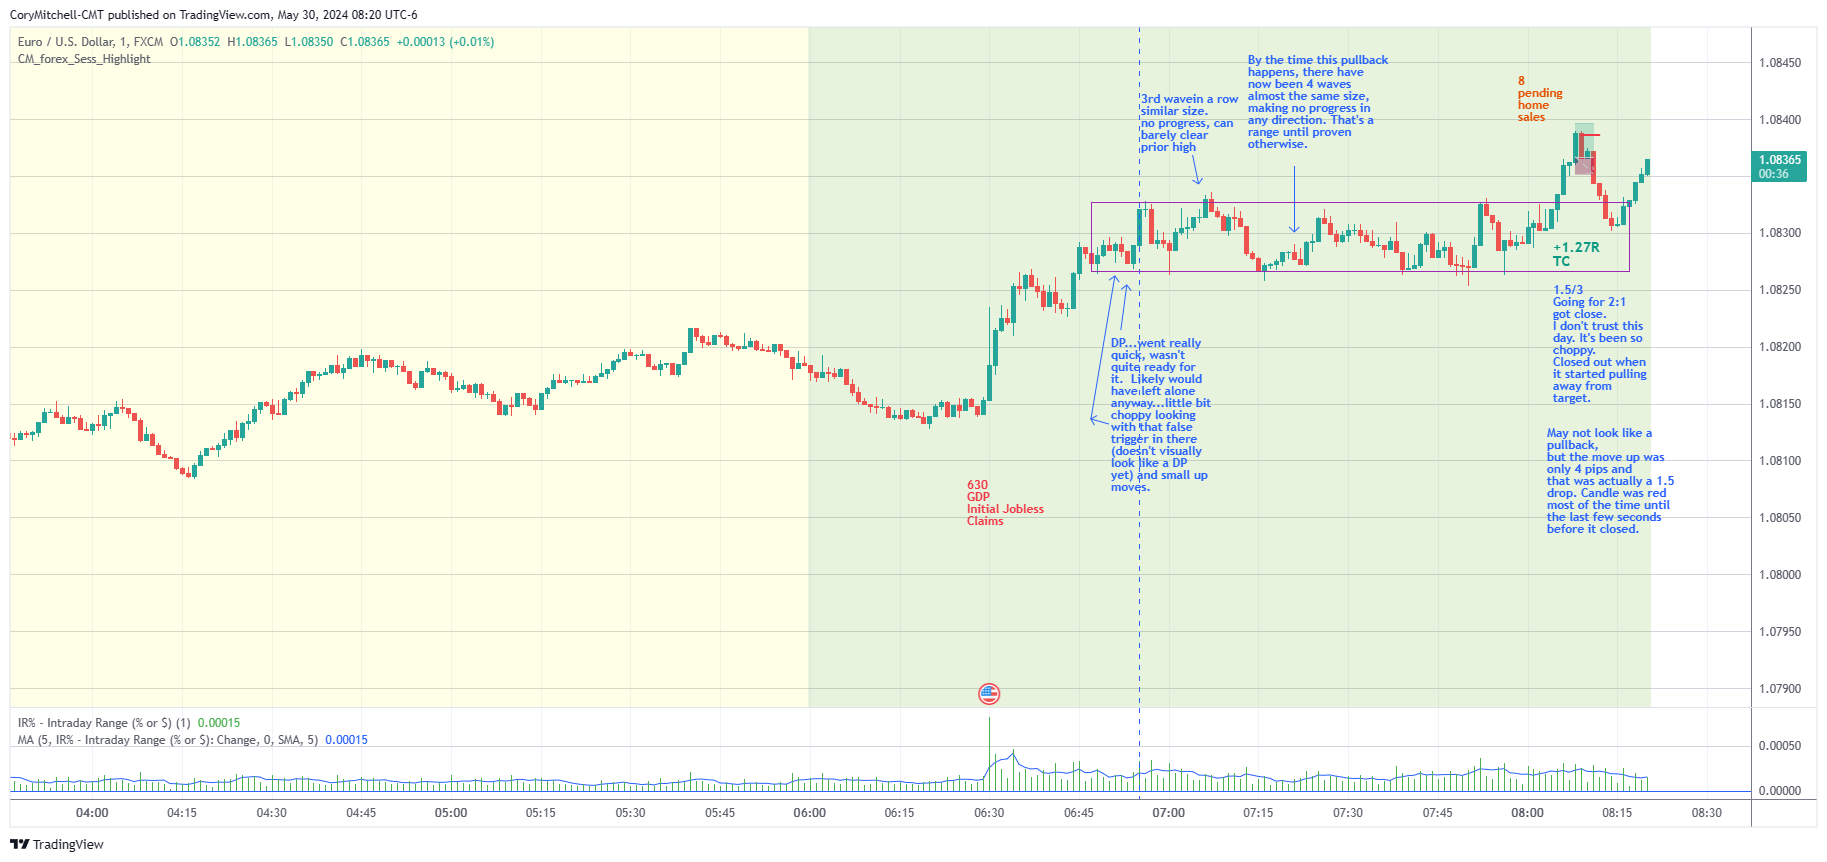 EURUSD 1 minute chart day trading examples May 30 2024